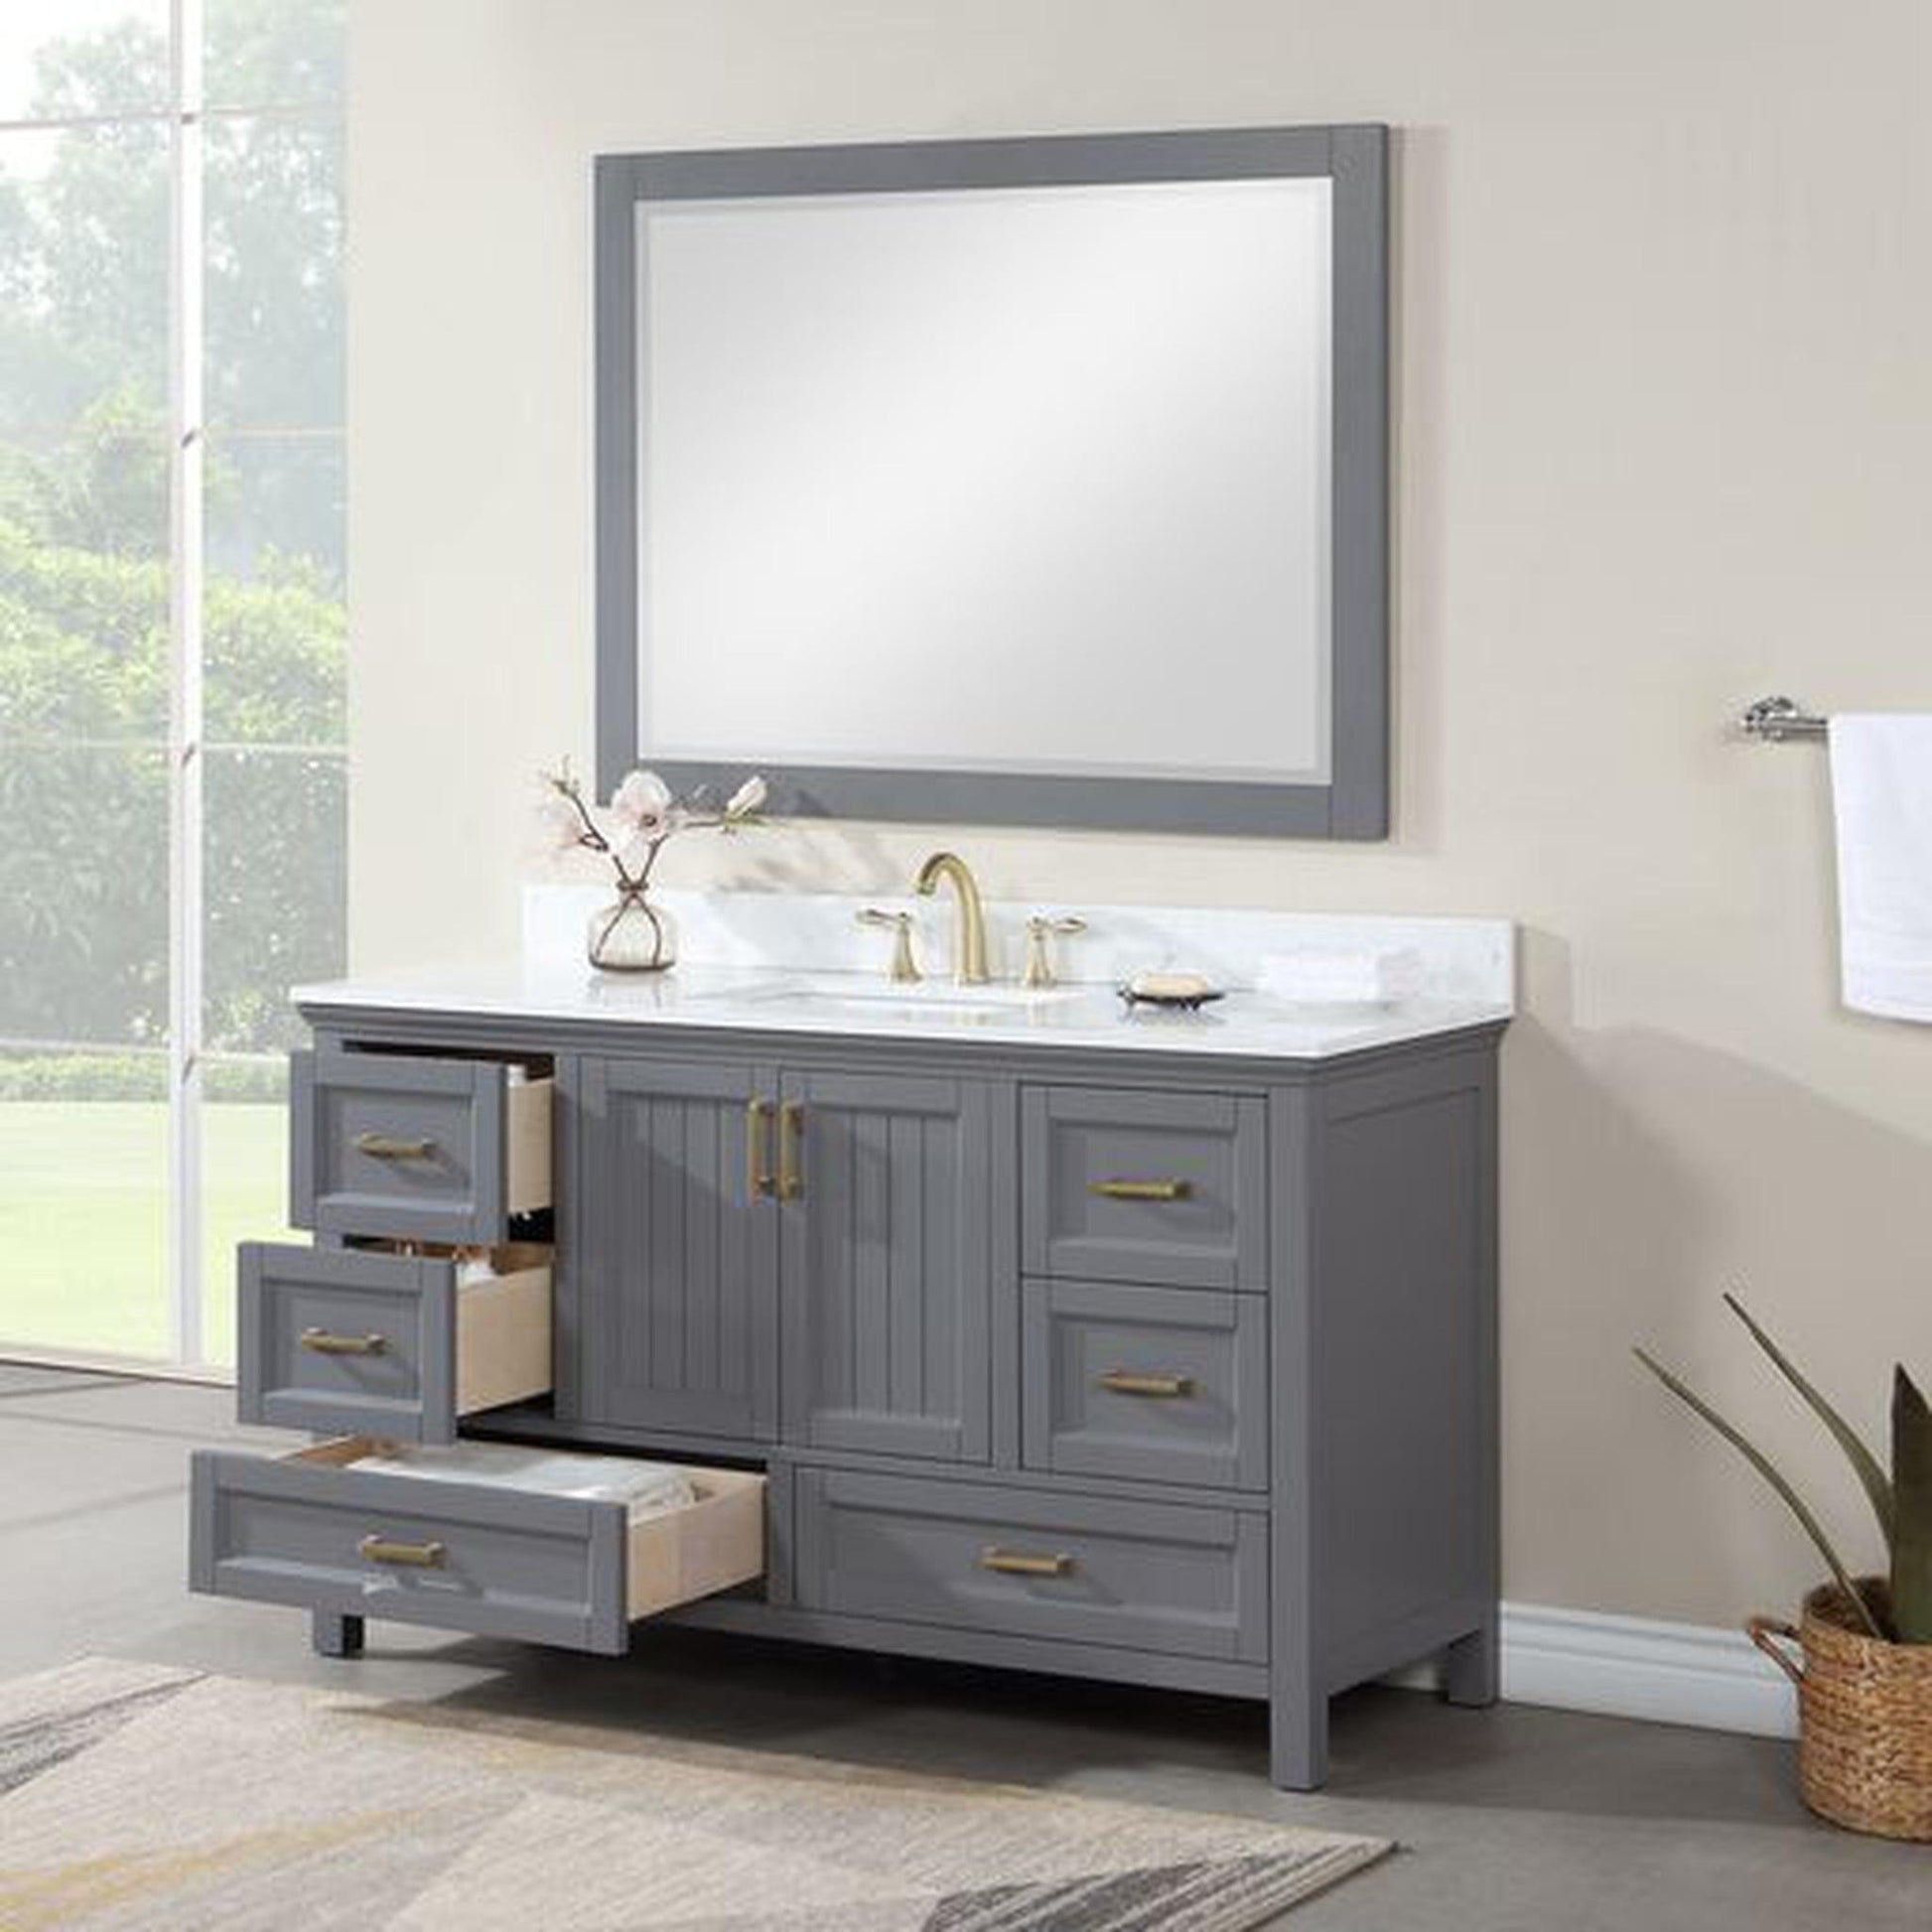 Altair Isla 60" Single Gray Freestanding Bathroom Vanity Set With Mirror, Aosta White Composite Stone Top, Rectangular Undermount Ceramic Sink, and Overflow